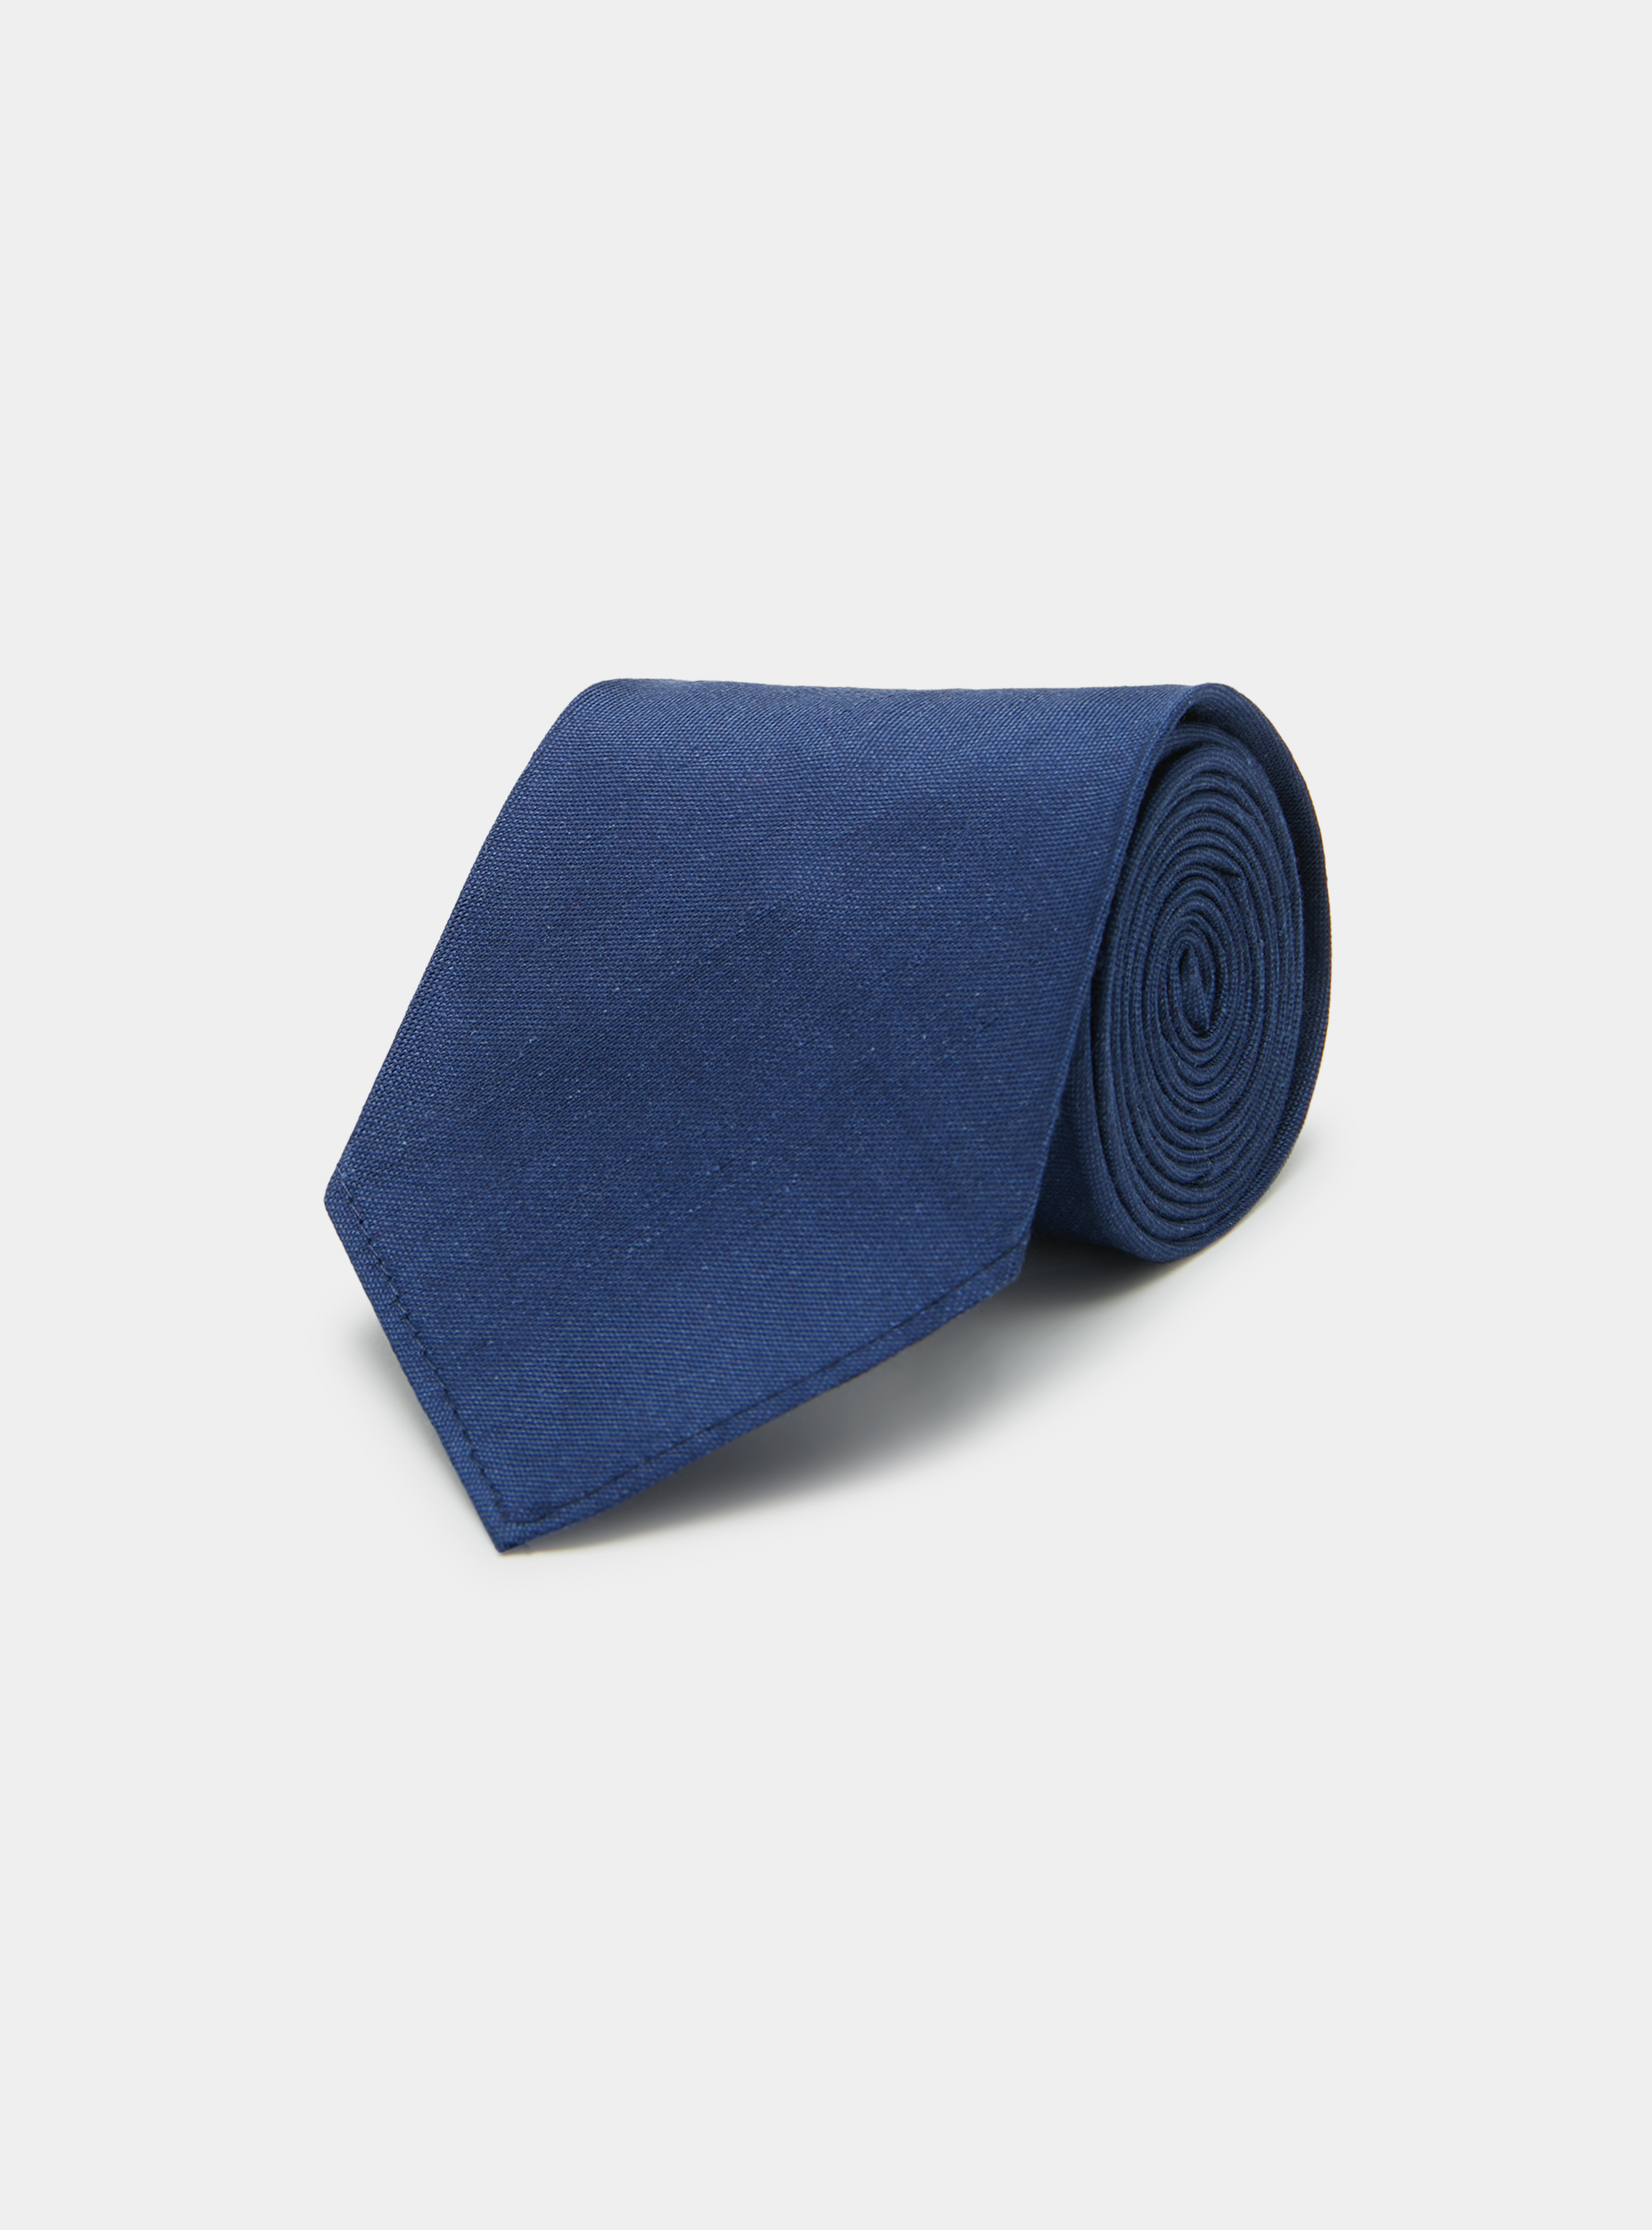 Gutteridge - Cravatta in seta e lino, Unisex, Blu, Taglia: Unica